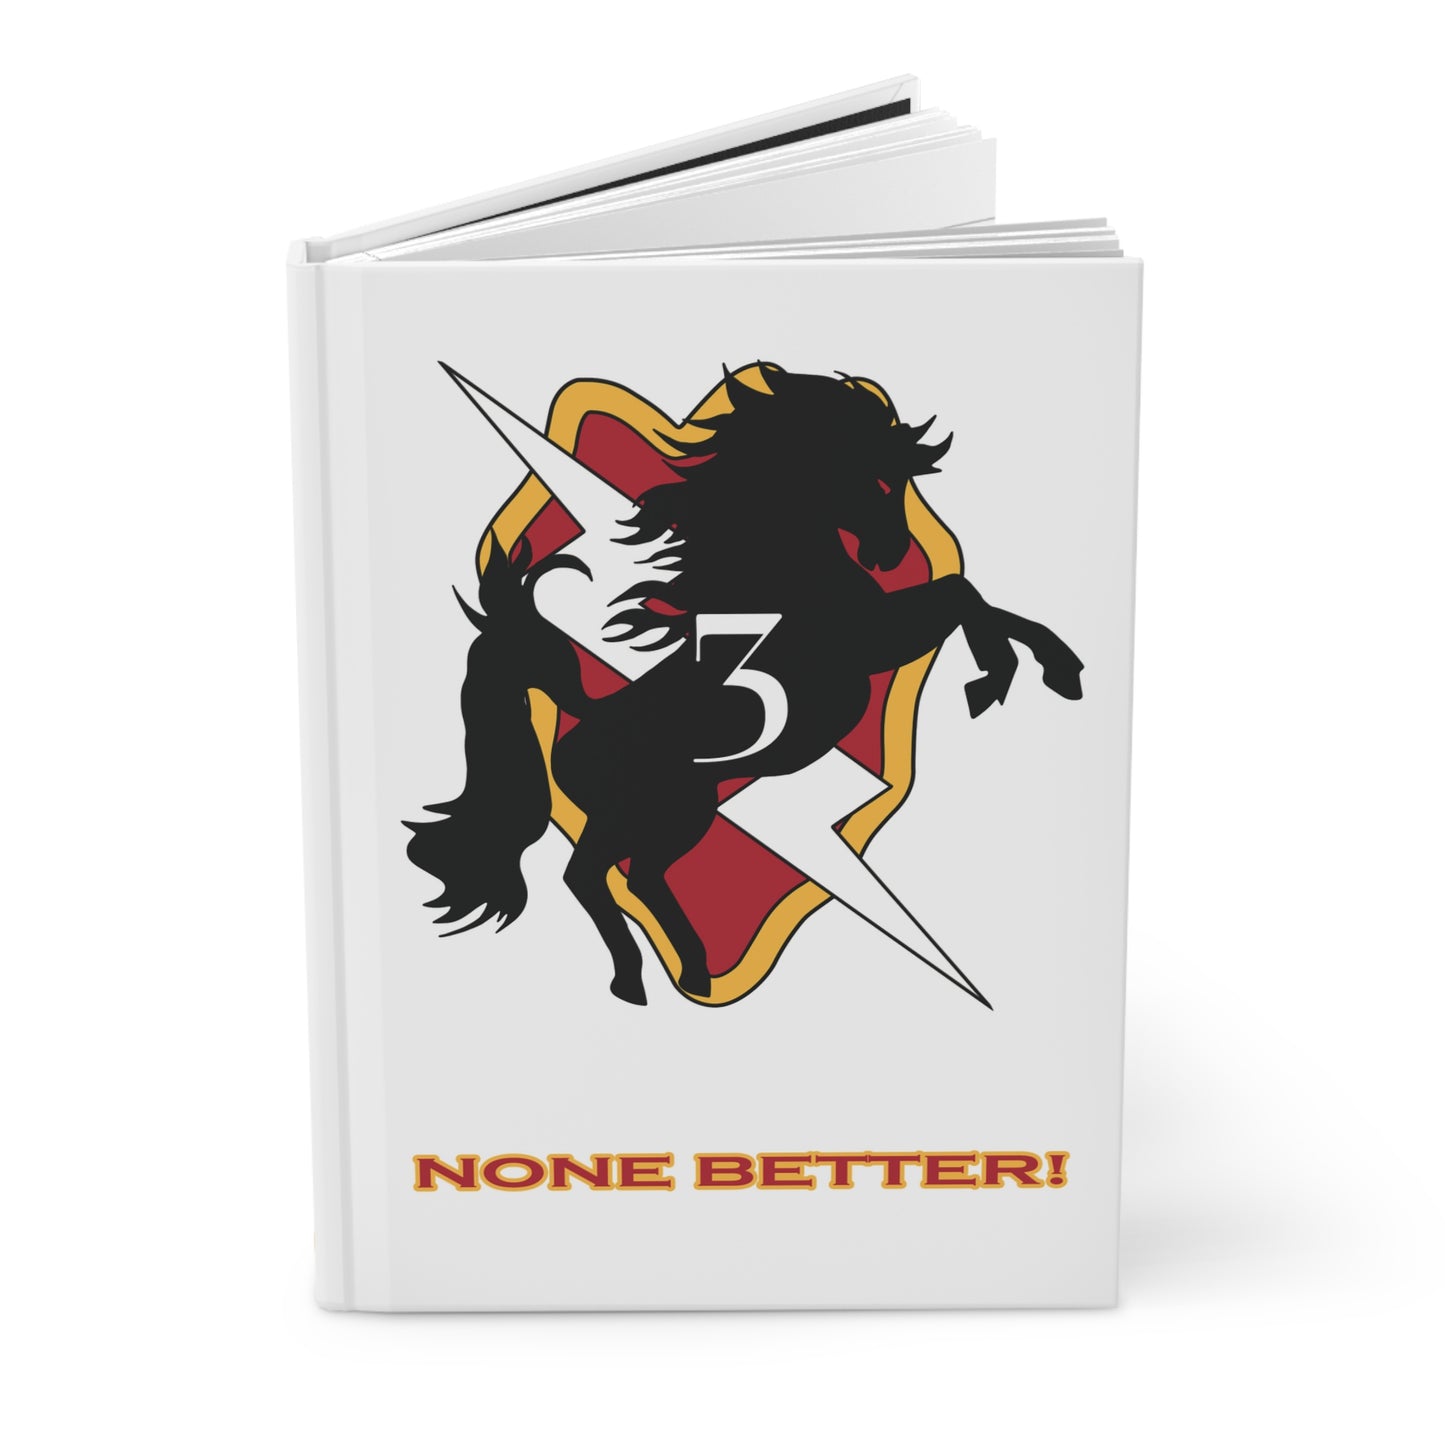 3IBCT "Broncos" AOR Leader Book